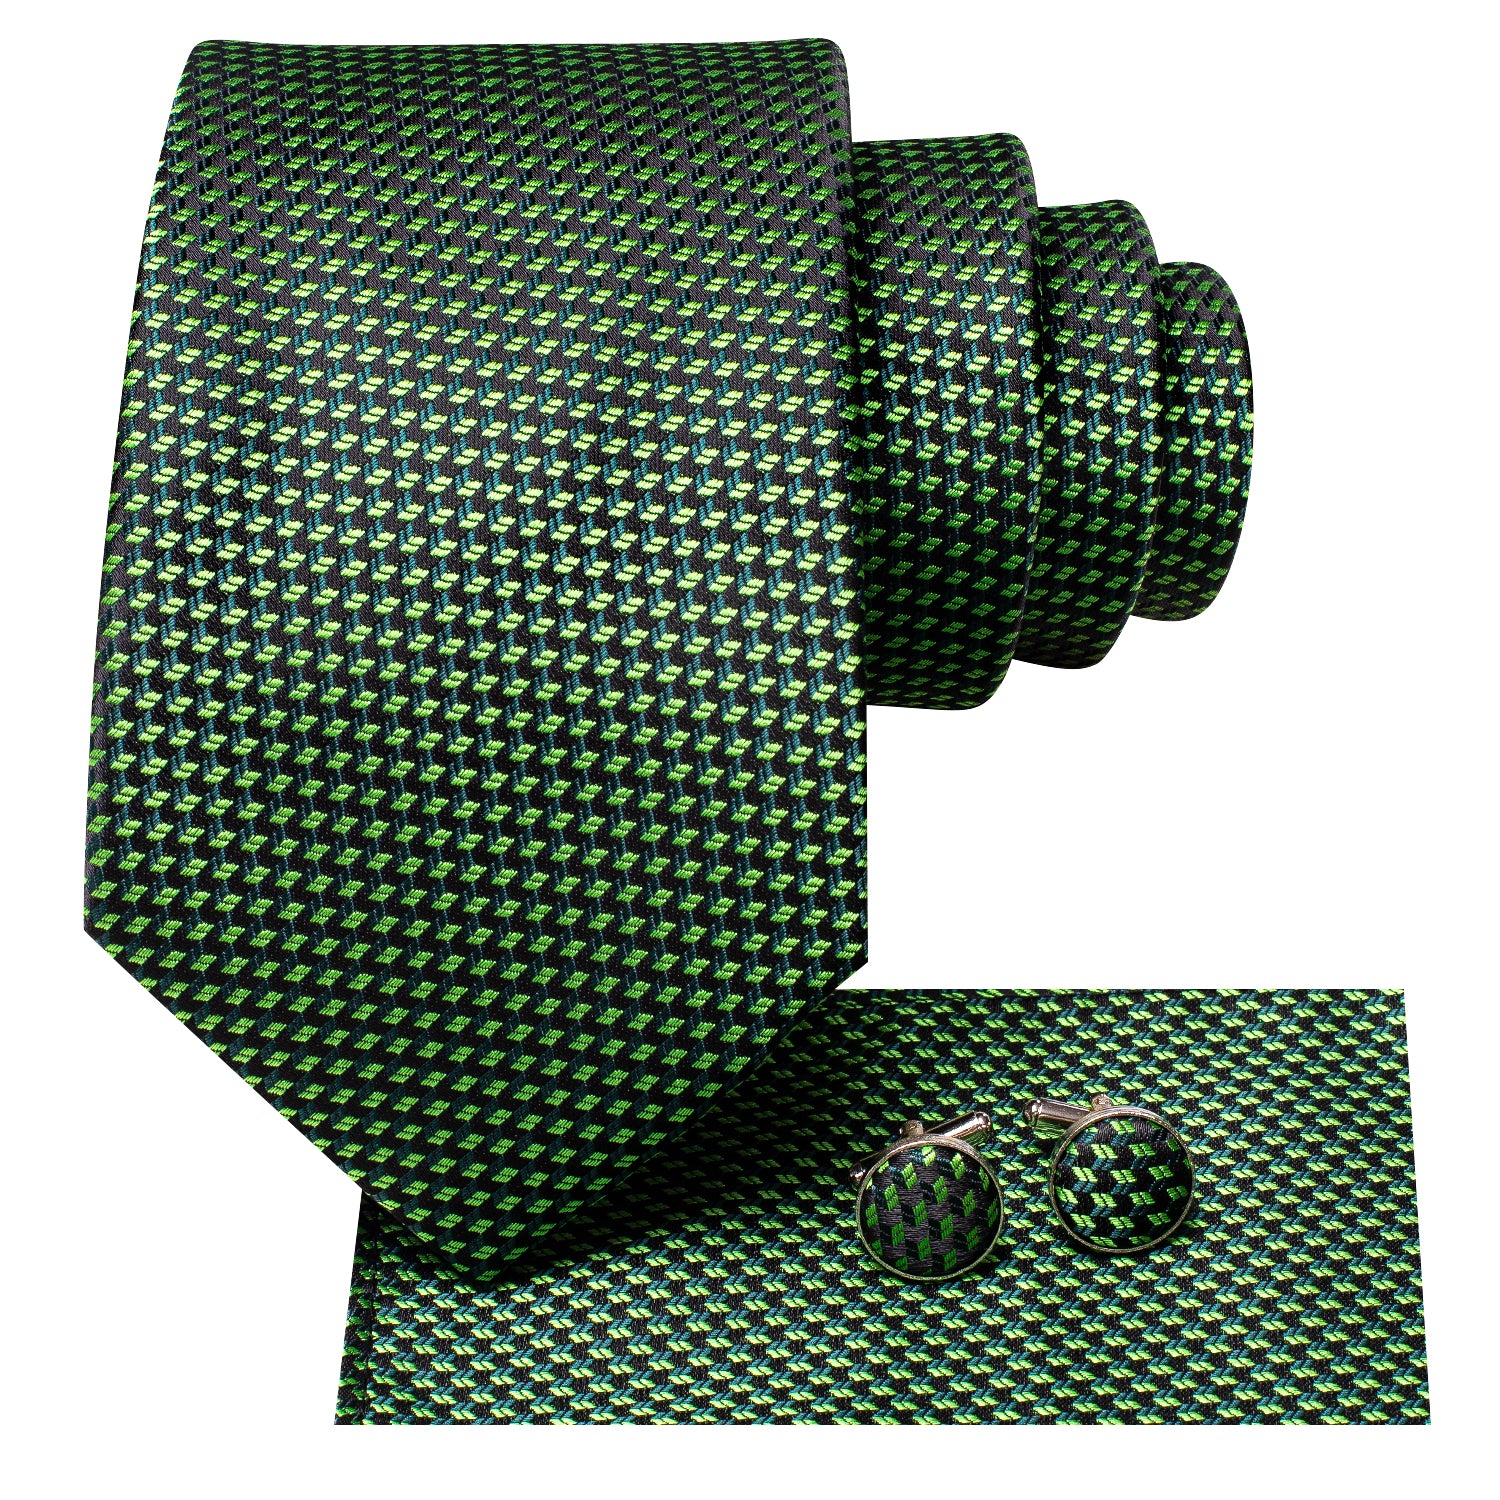 New Dark Green Plaid Tie Pocket Square Cufflinks Set